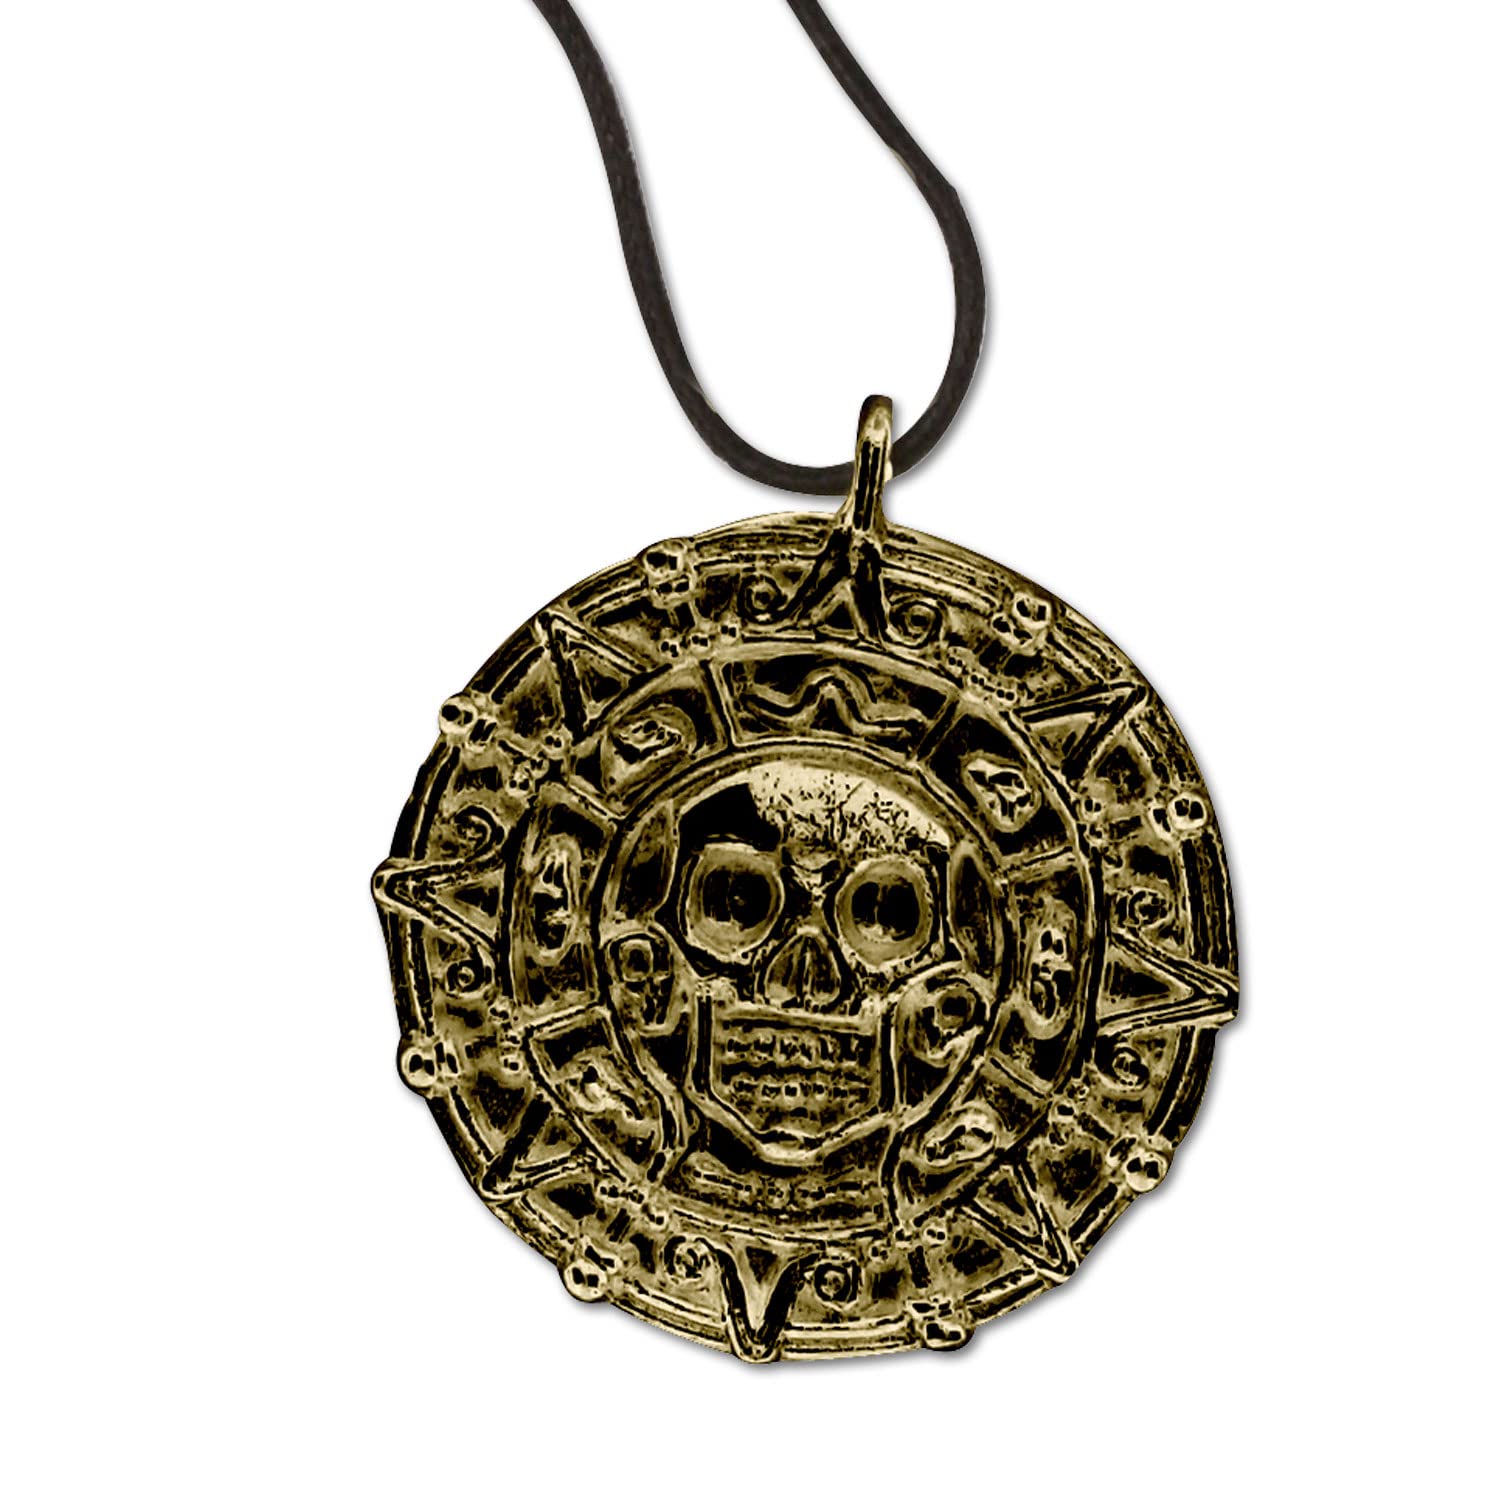 BladesUSA - COIN - Coin Necklace, Antique Gold Alloy Metal Medallion, Includes Black Nylon Neck Cord, Perfect for Cosplay, Pirates, Caribbean, Aztec, Skull, Fantasy - COIN, Small